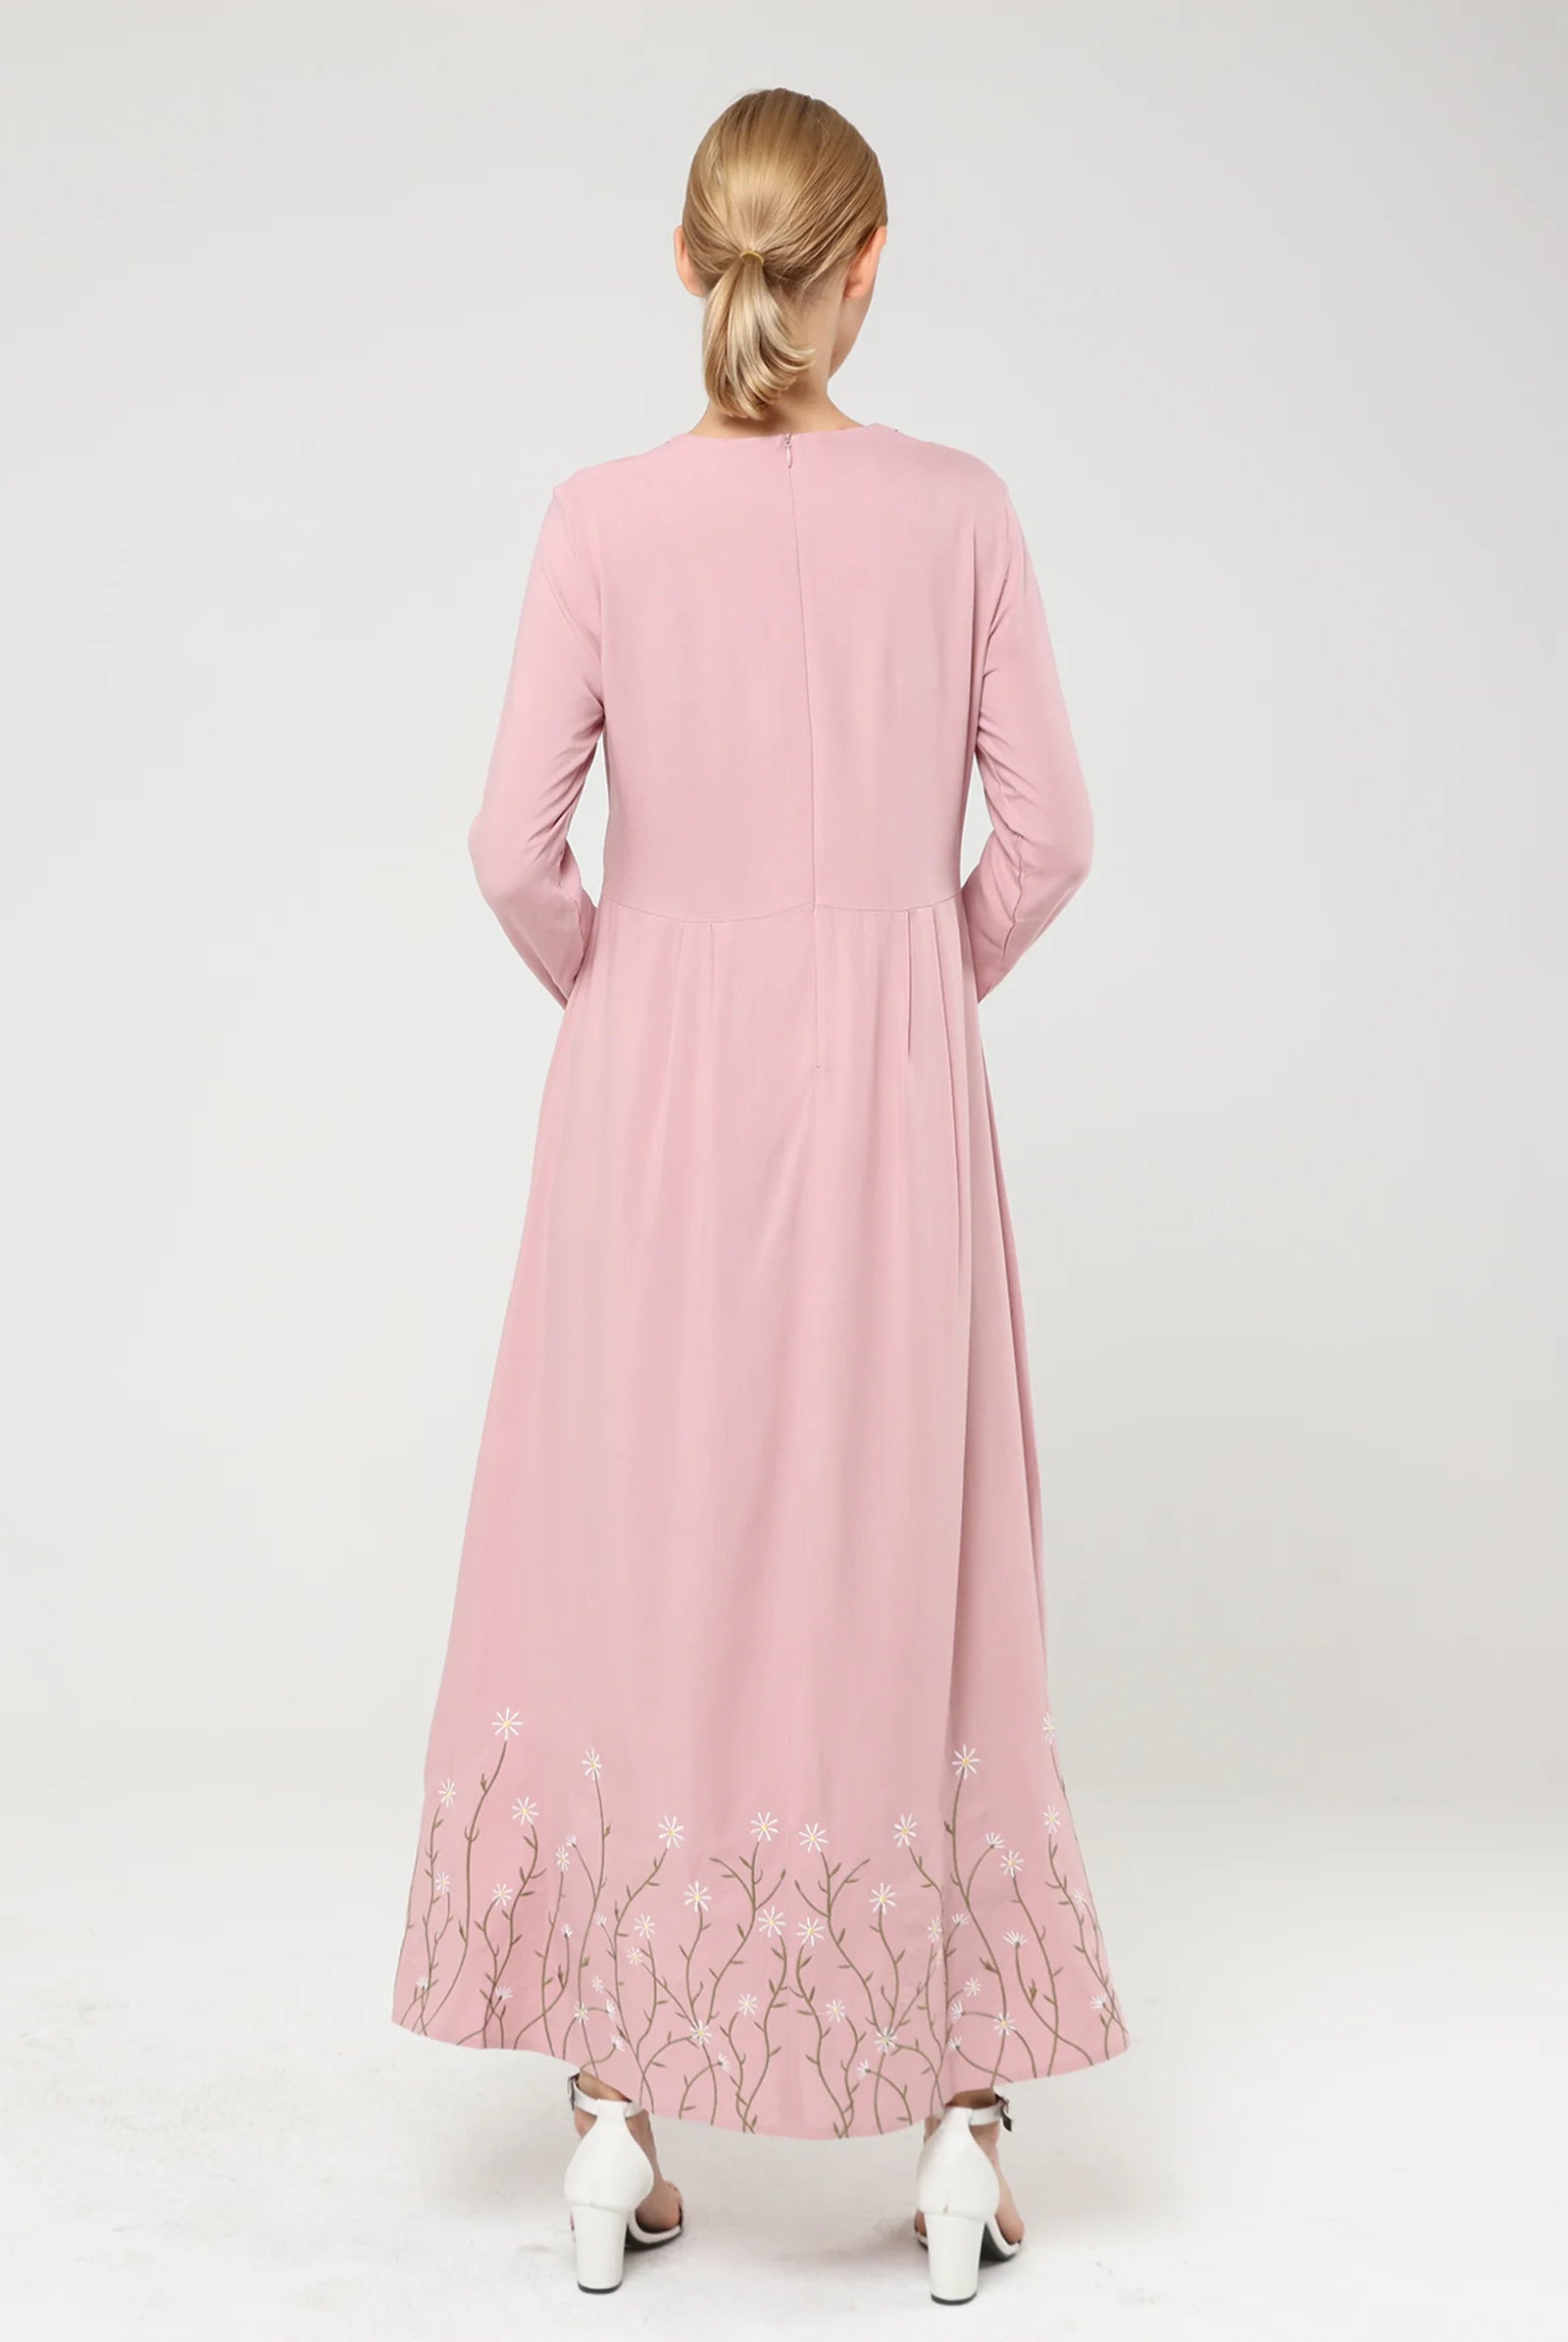 pink embroidered dress modora